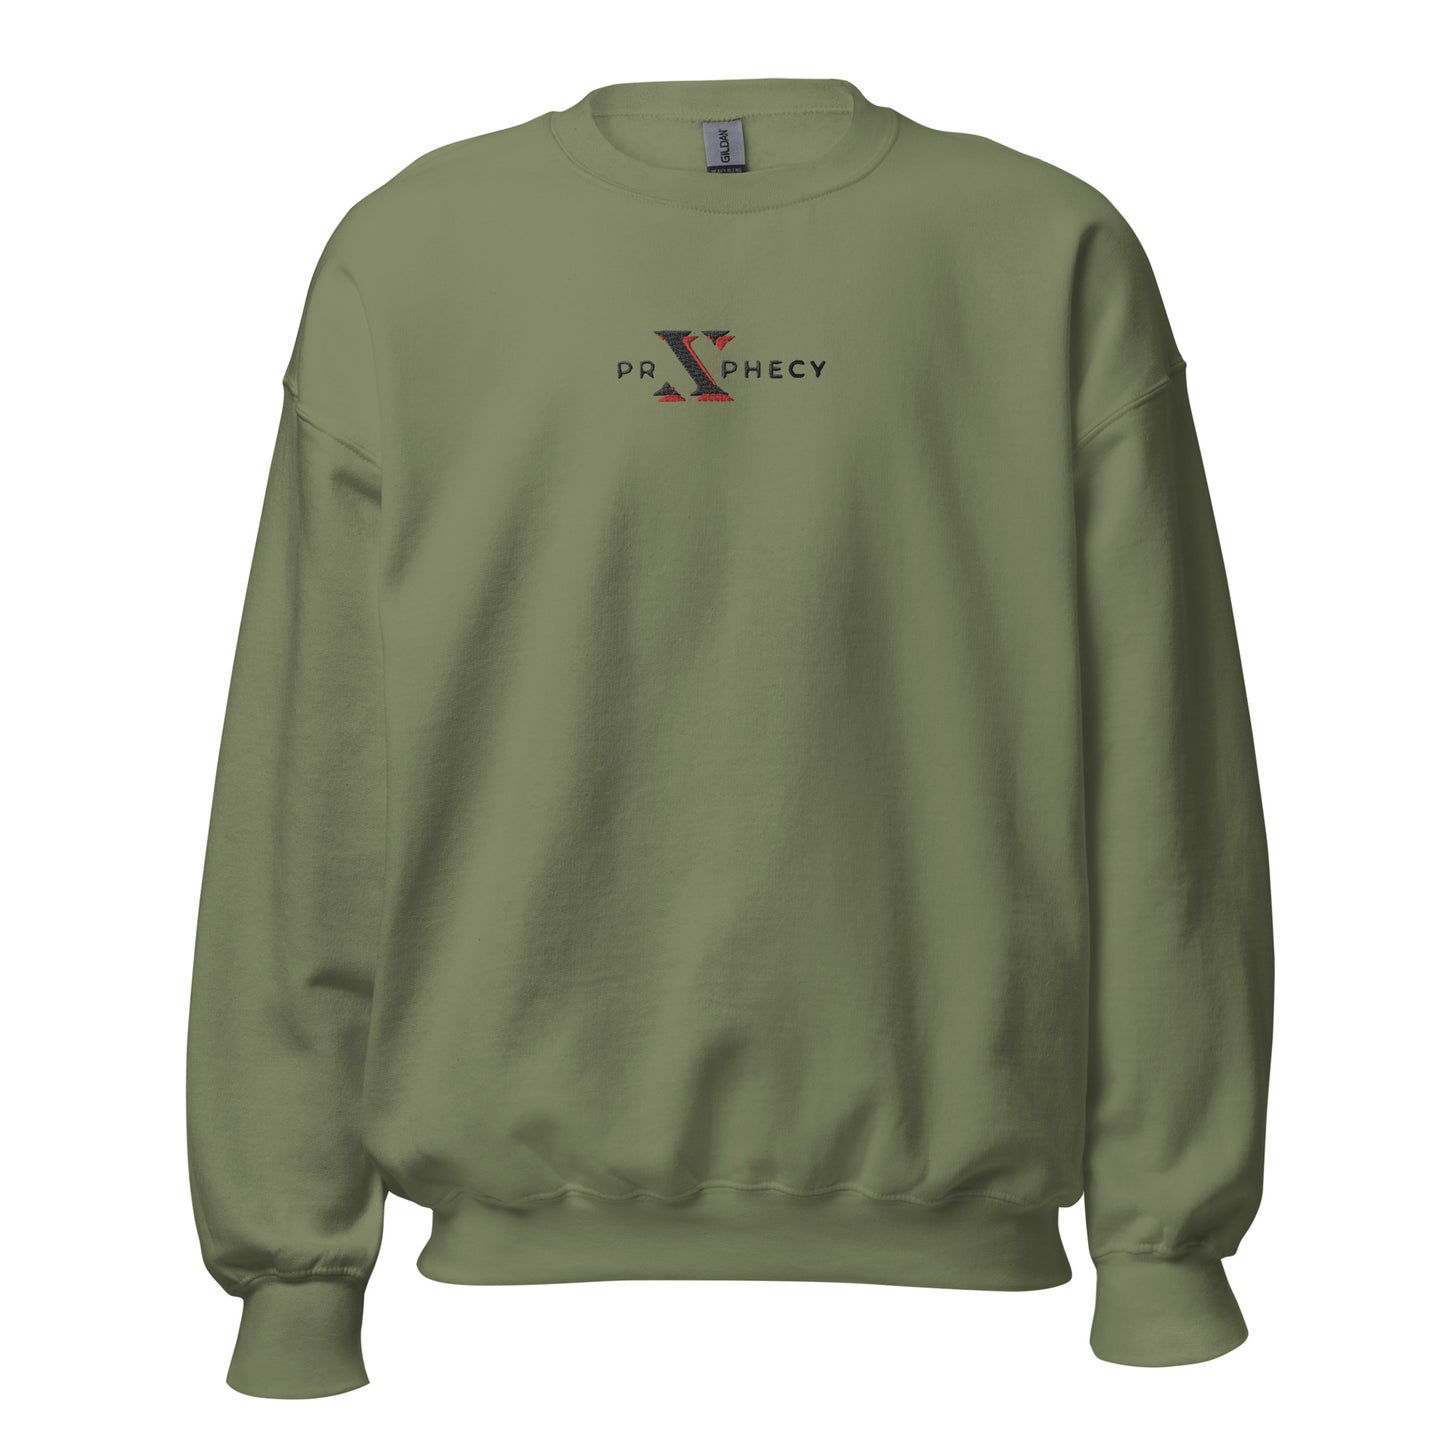 Black "X" Prxphecy Unisex Sweatshirt